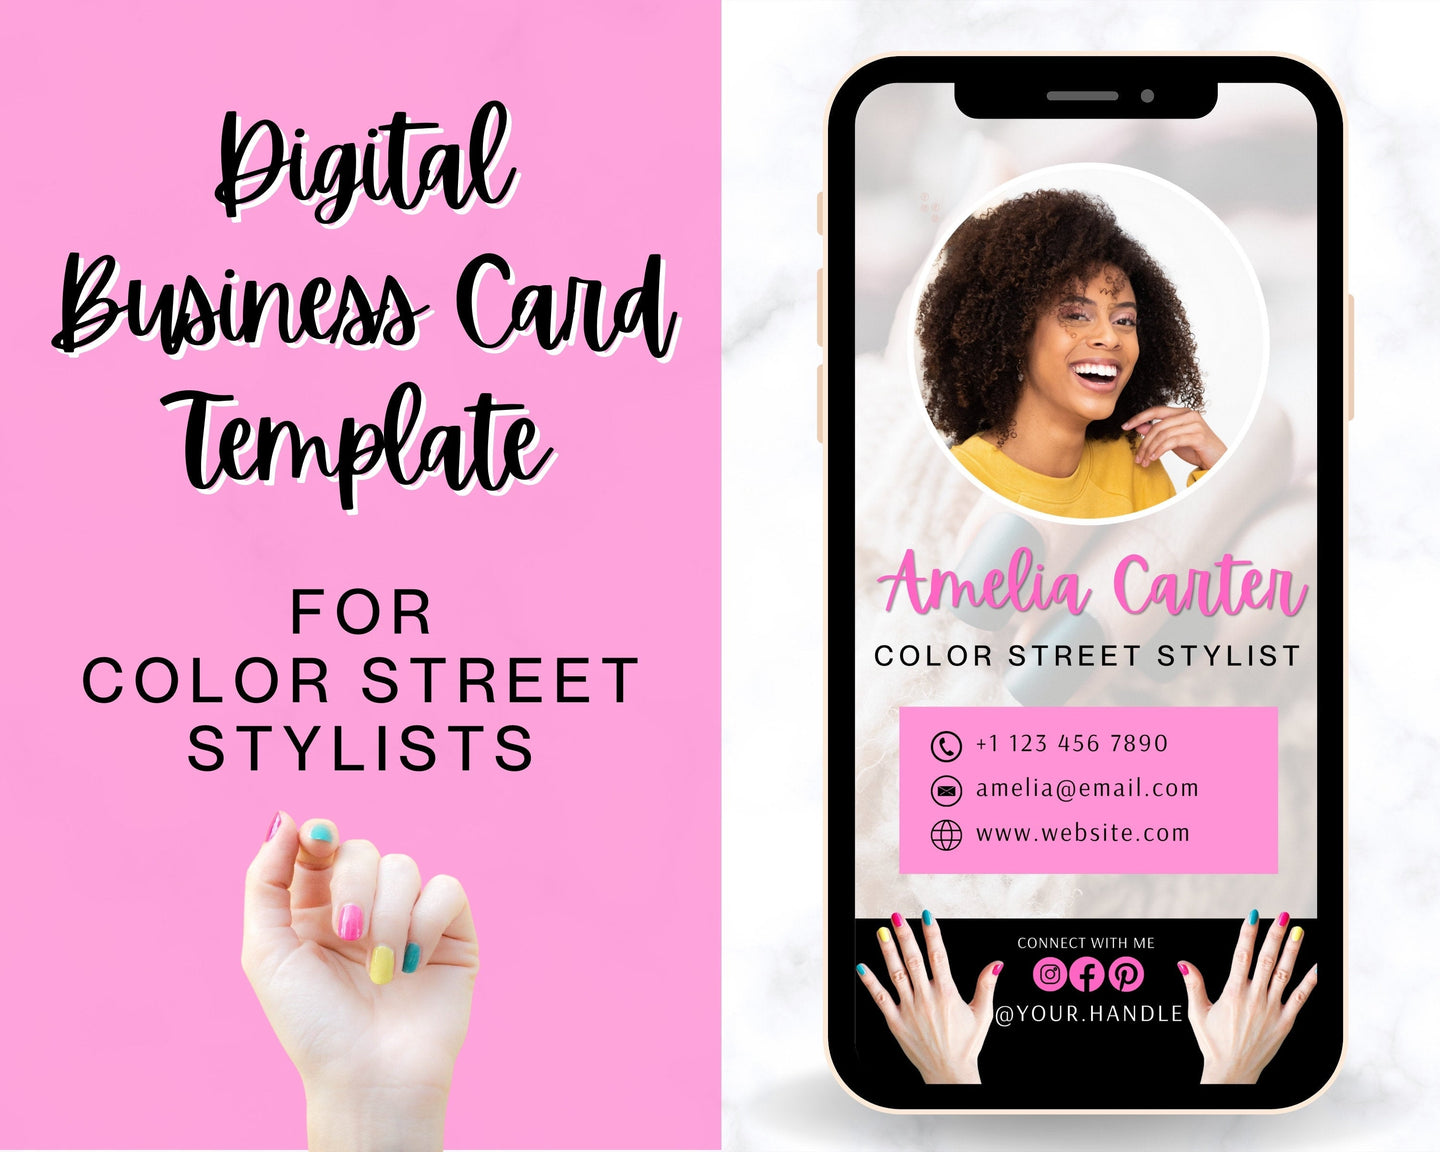 Color Street Digital Business Card Template. DIY add logo & photo! ColorStreet Stylist, Color St Tracker, Mani Nails, Editable Canva Design